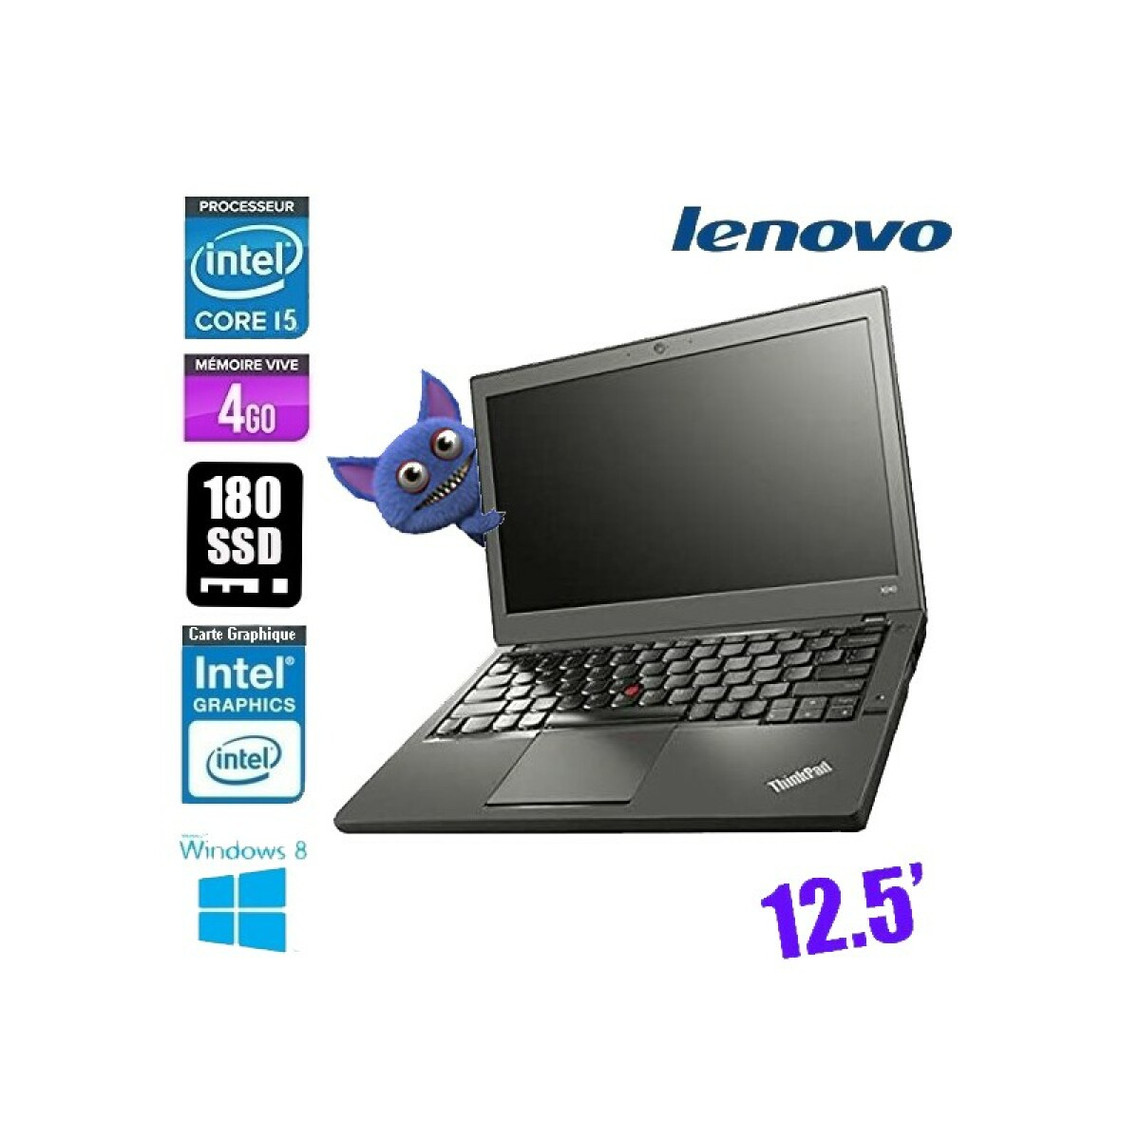 Lenovo LENOVO THINKPAD X240 CORE I5 4300U 1.9GHZ LENOVO THINKPAD X240 CORE I5 4300U 1.9GHZ Intel Core i5-4300U-1.9Ghz 4 Go 180 Go Intel HD Graphics Familys WIFI WEBCAM 12.5 Windows 8 AZERTY